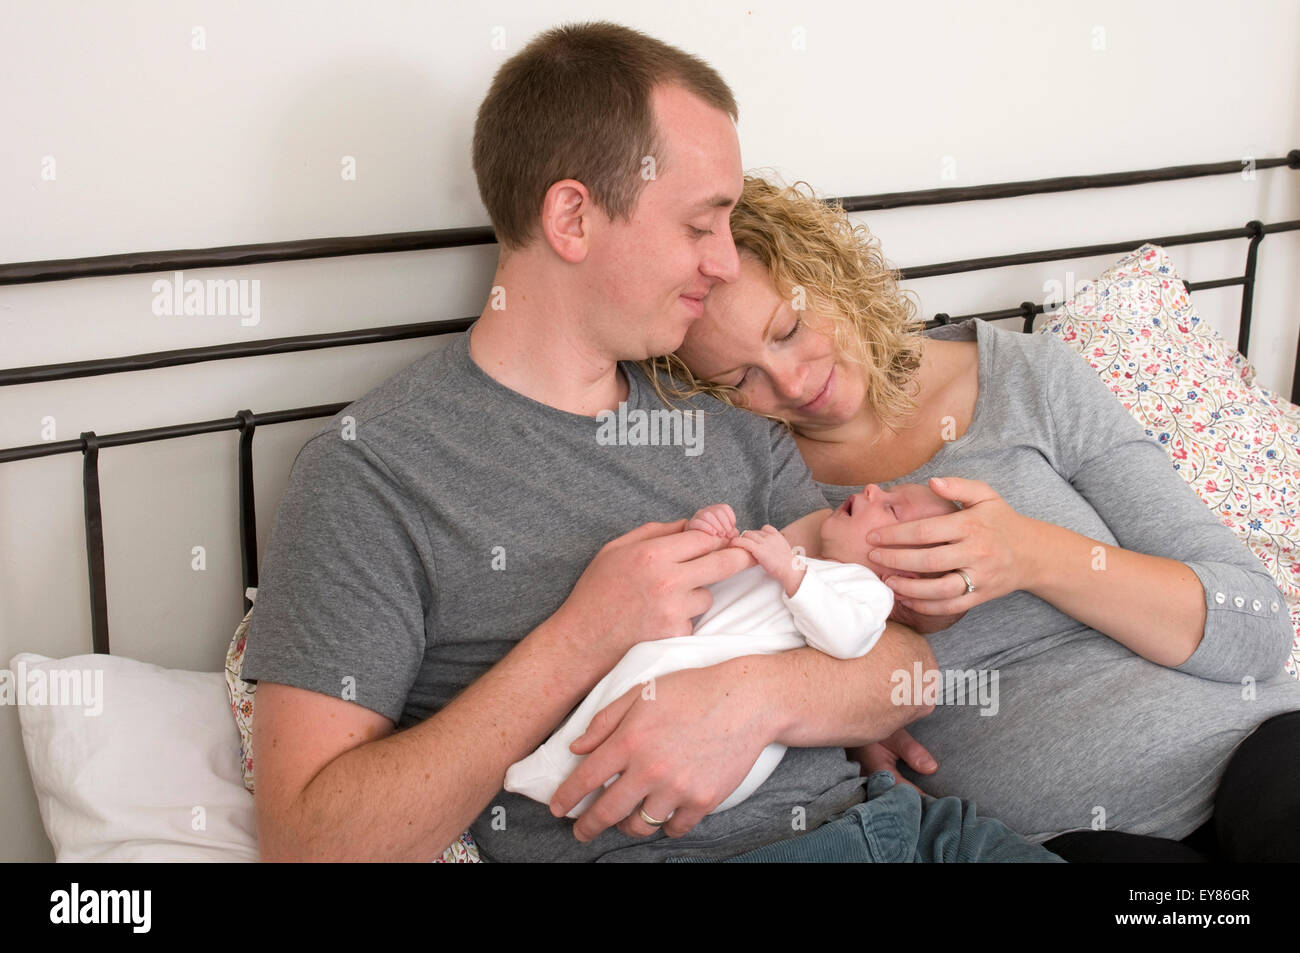 New Parents Holding Cuddling Their Newborn Baby Stock Photo Alamy